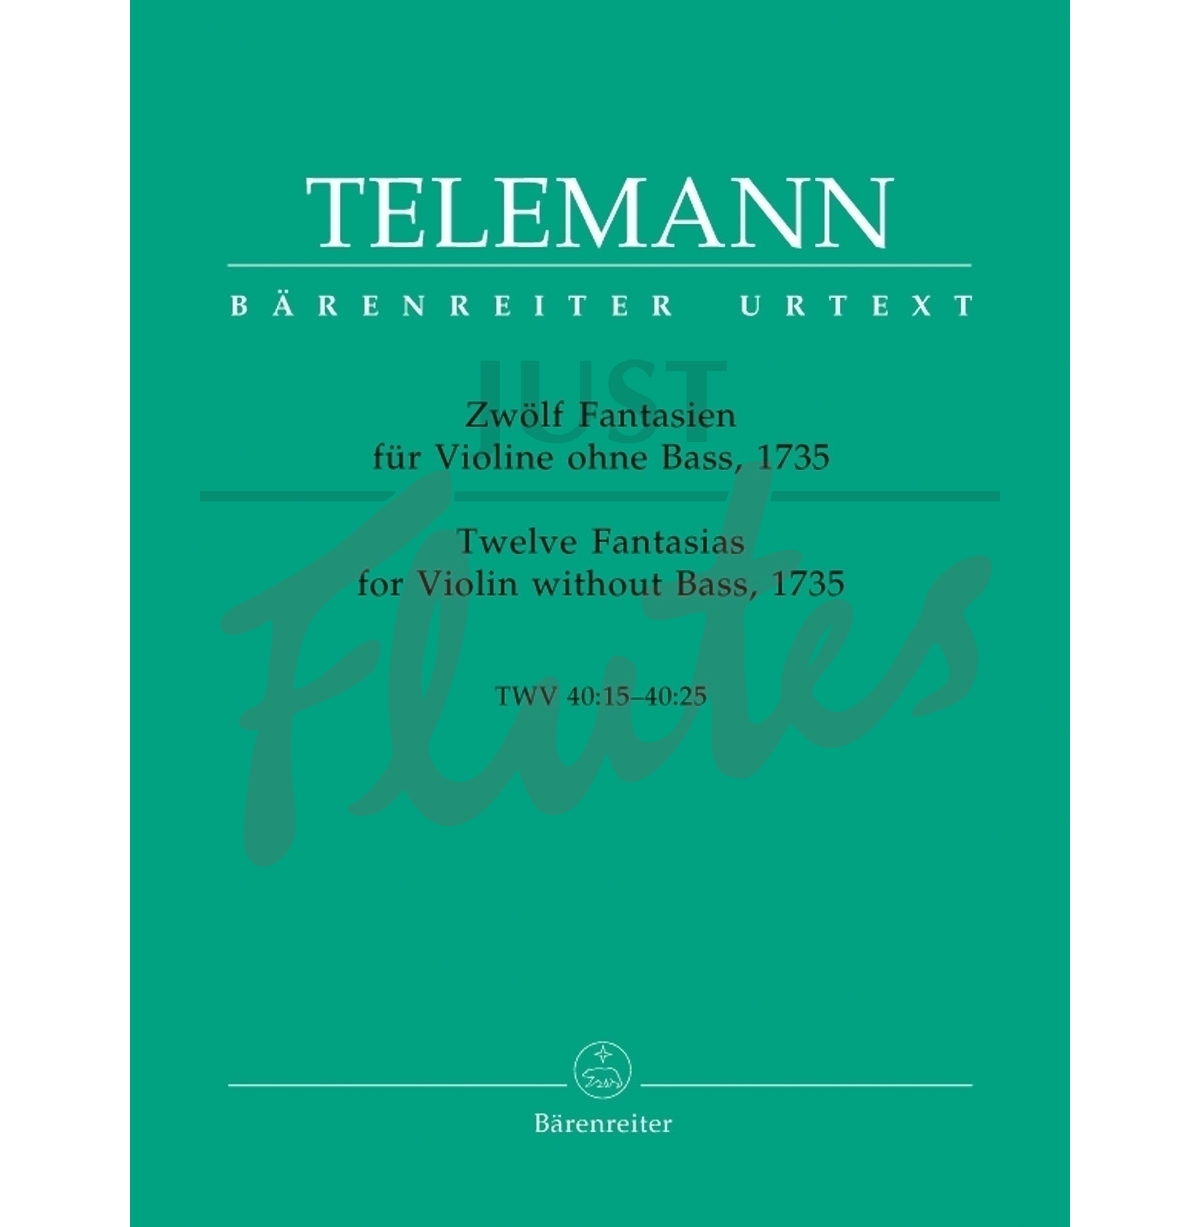 Twelve Fantasias for Violin